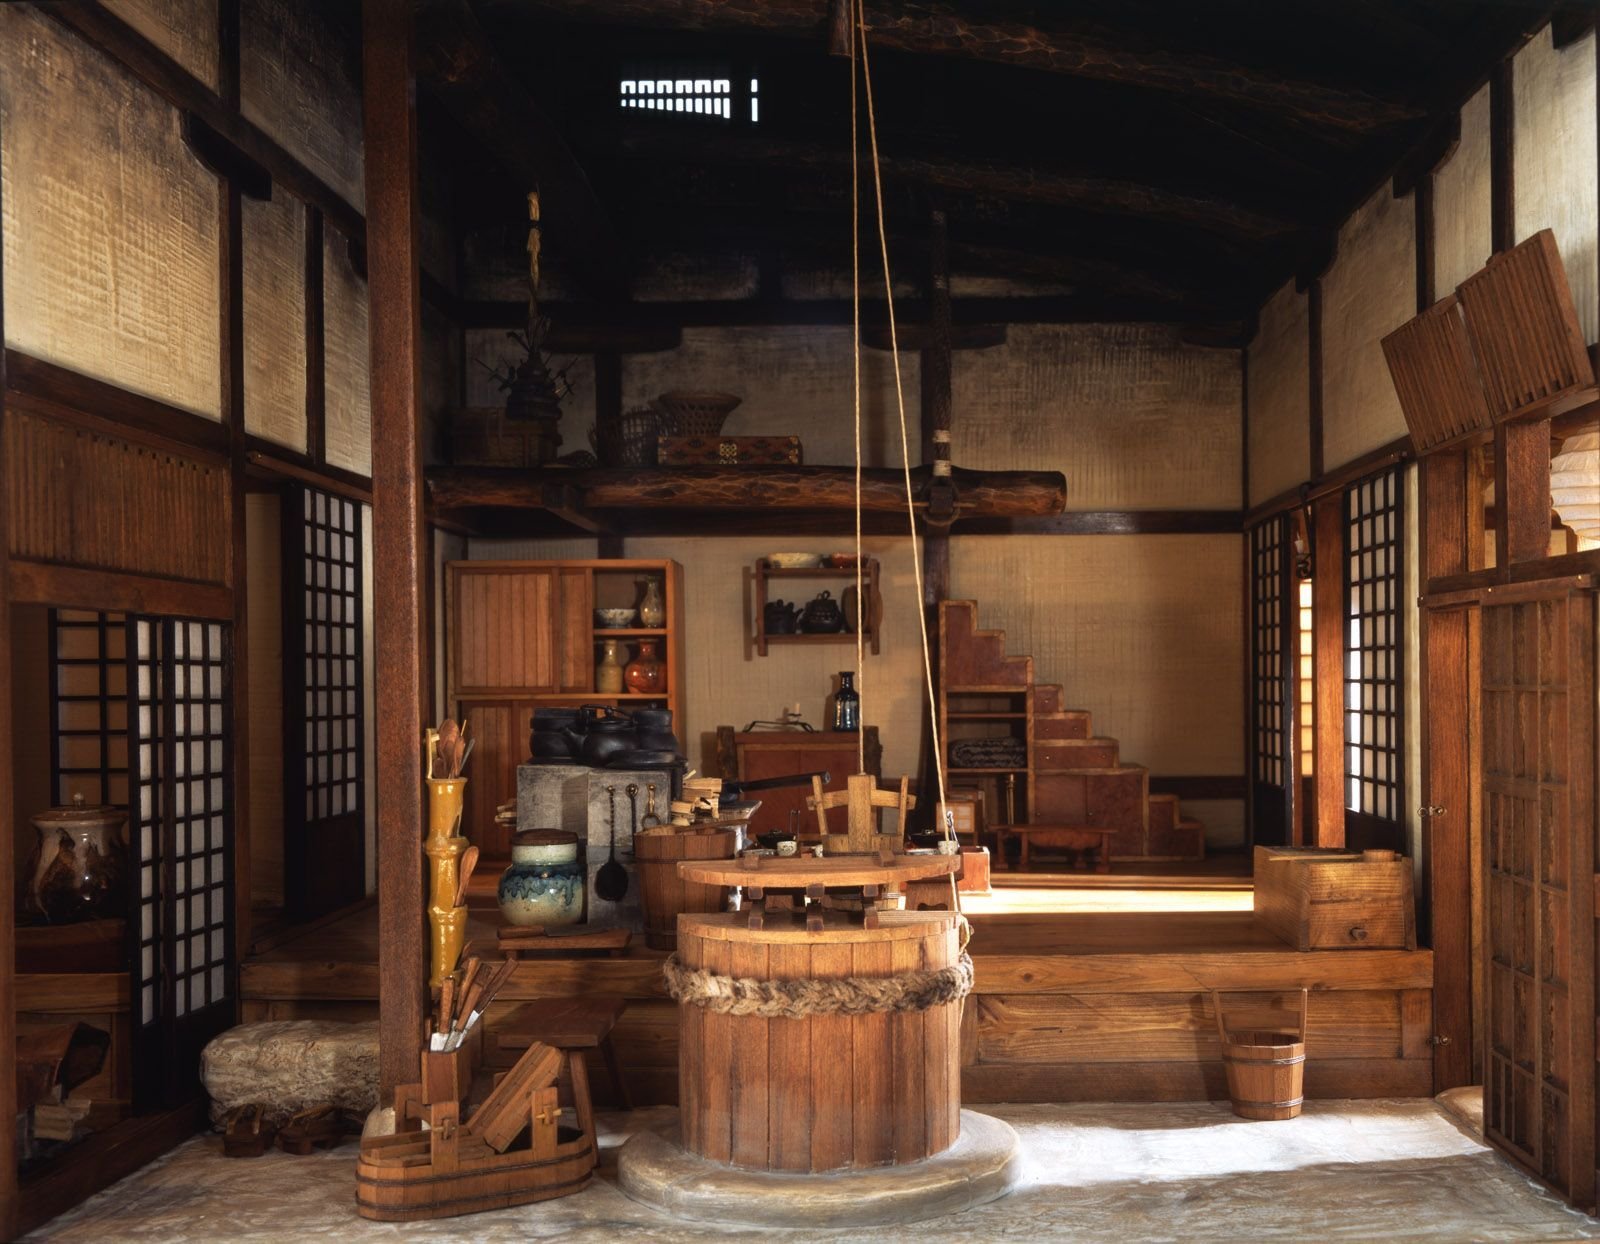 Japanese traditional kitchen - 72 photo